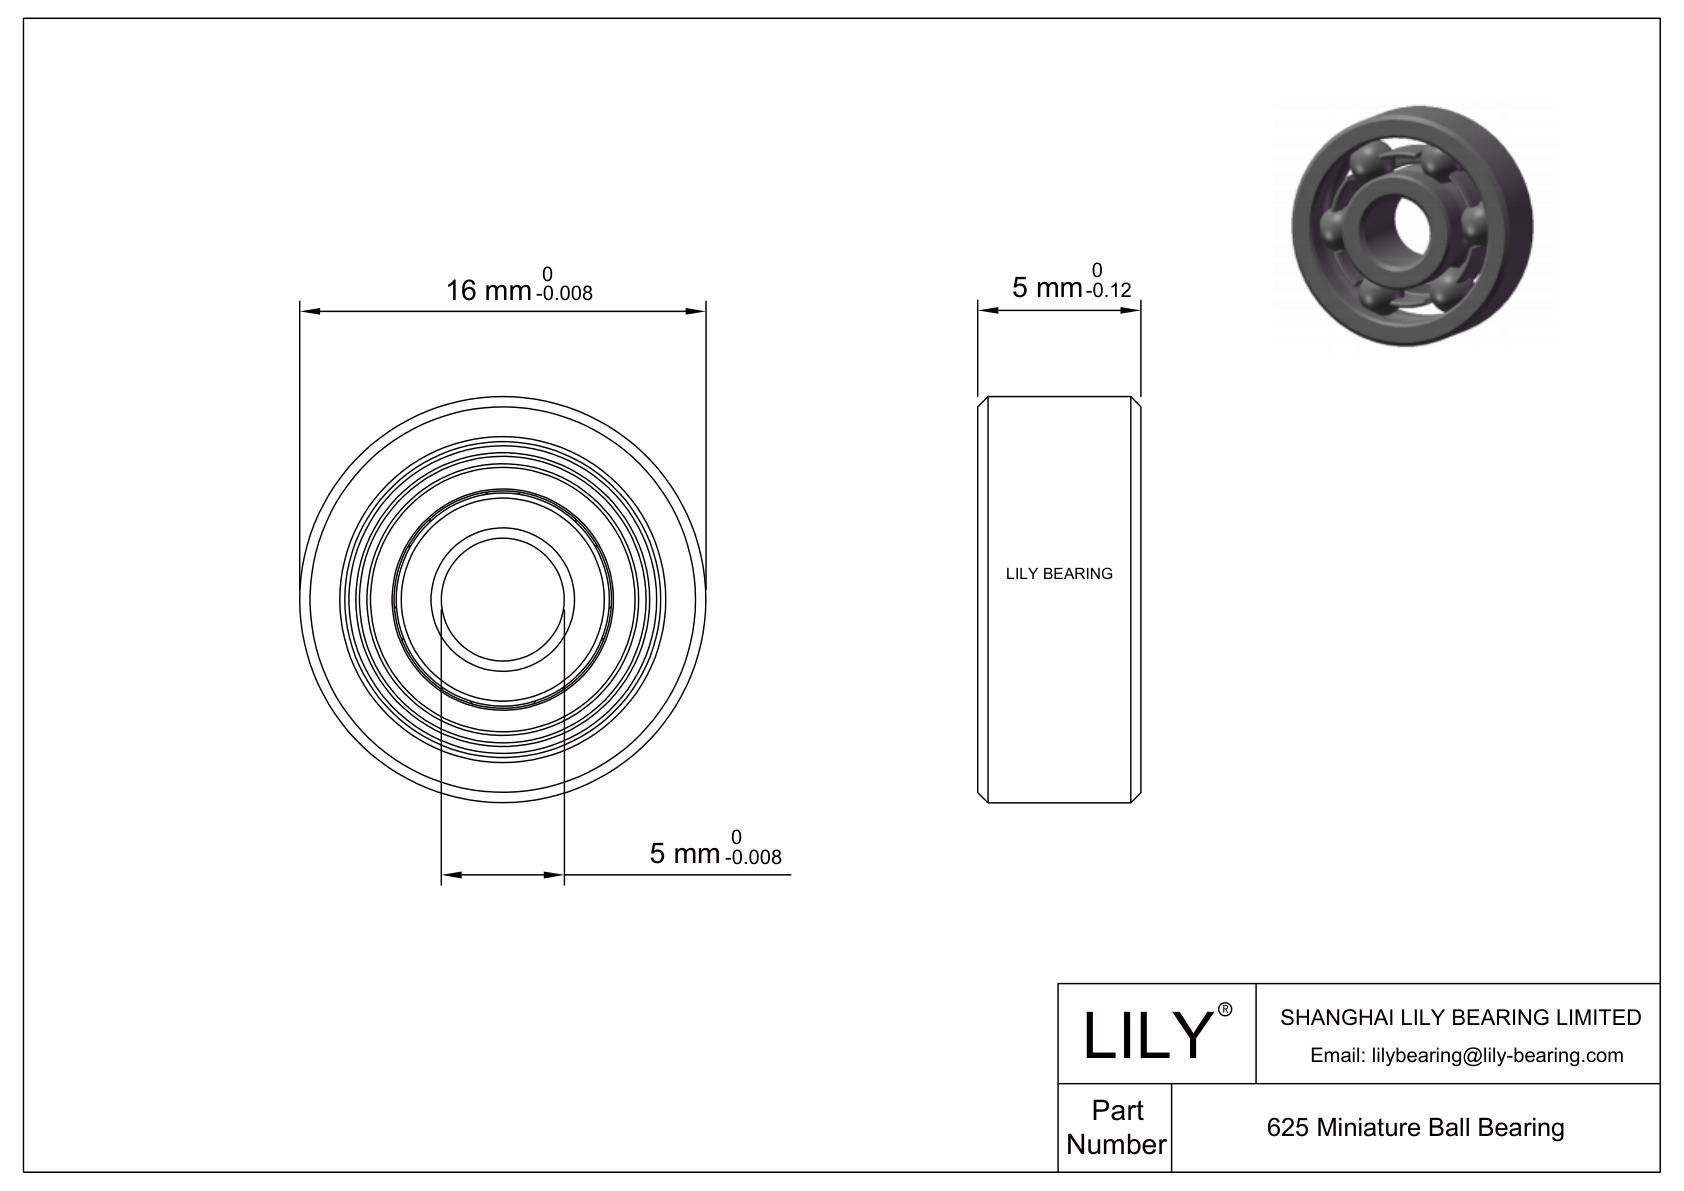 LILY-PU62522-9 Polyurethane Coated Bearing cad drawing